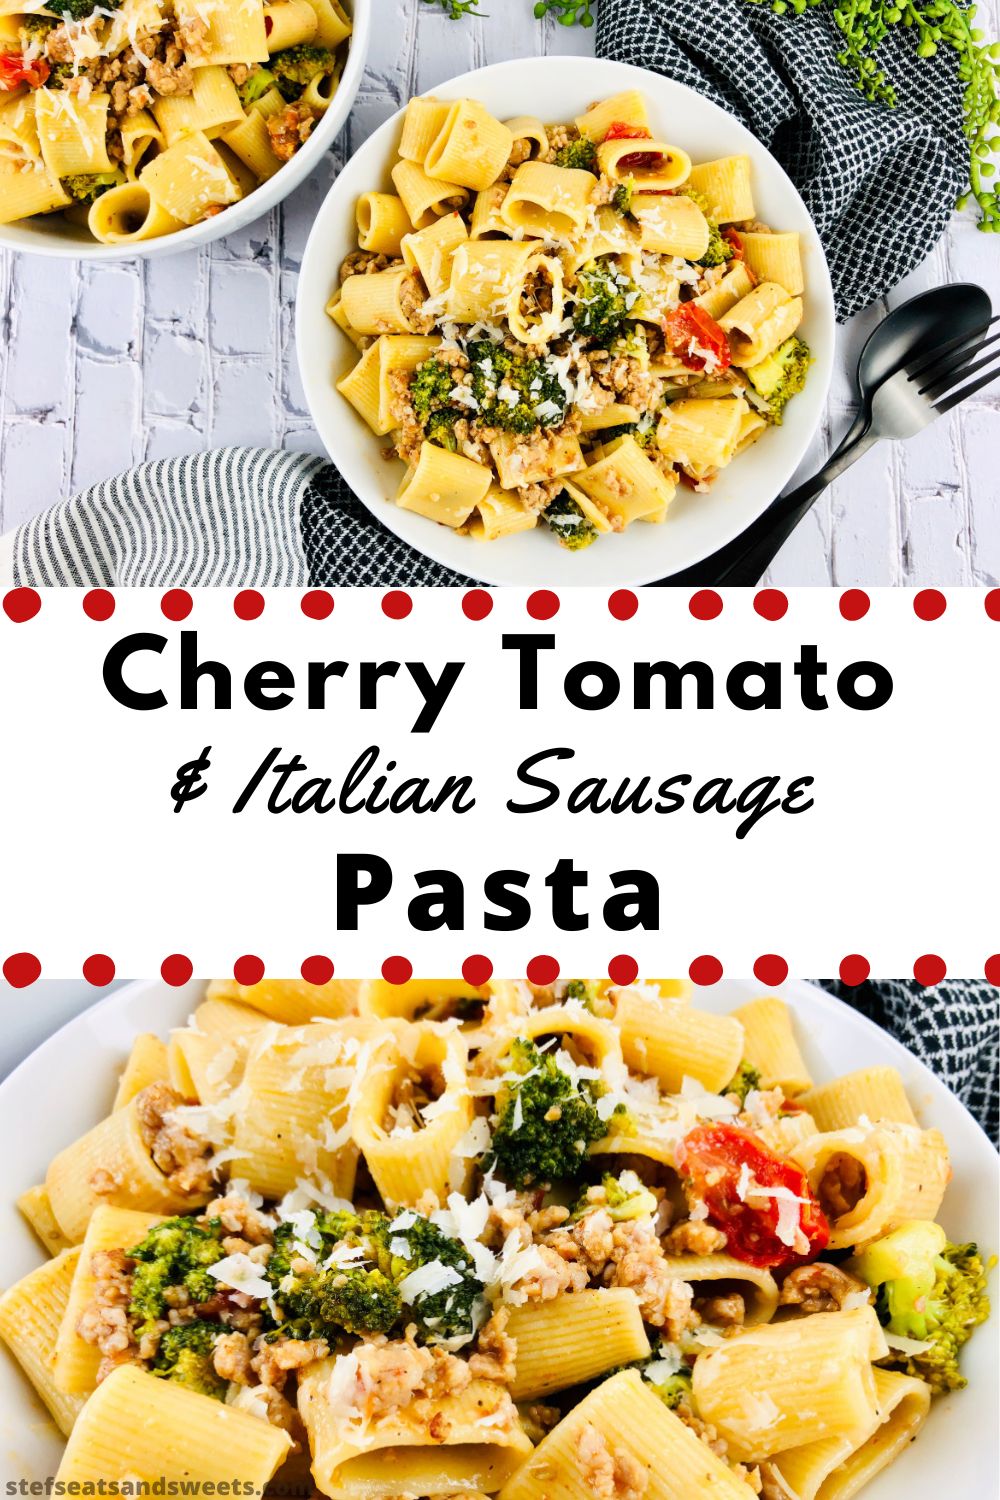 Cherry Tomato and Italian Sausage Pasta with broccoli